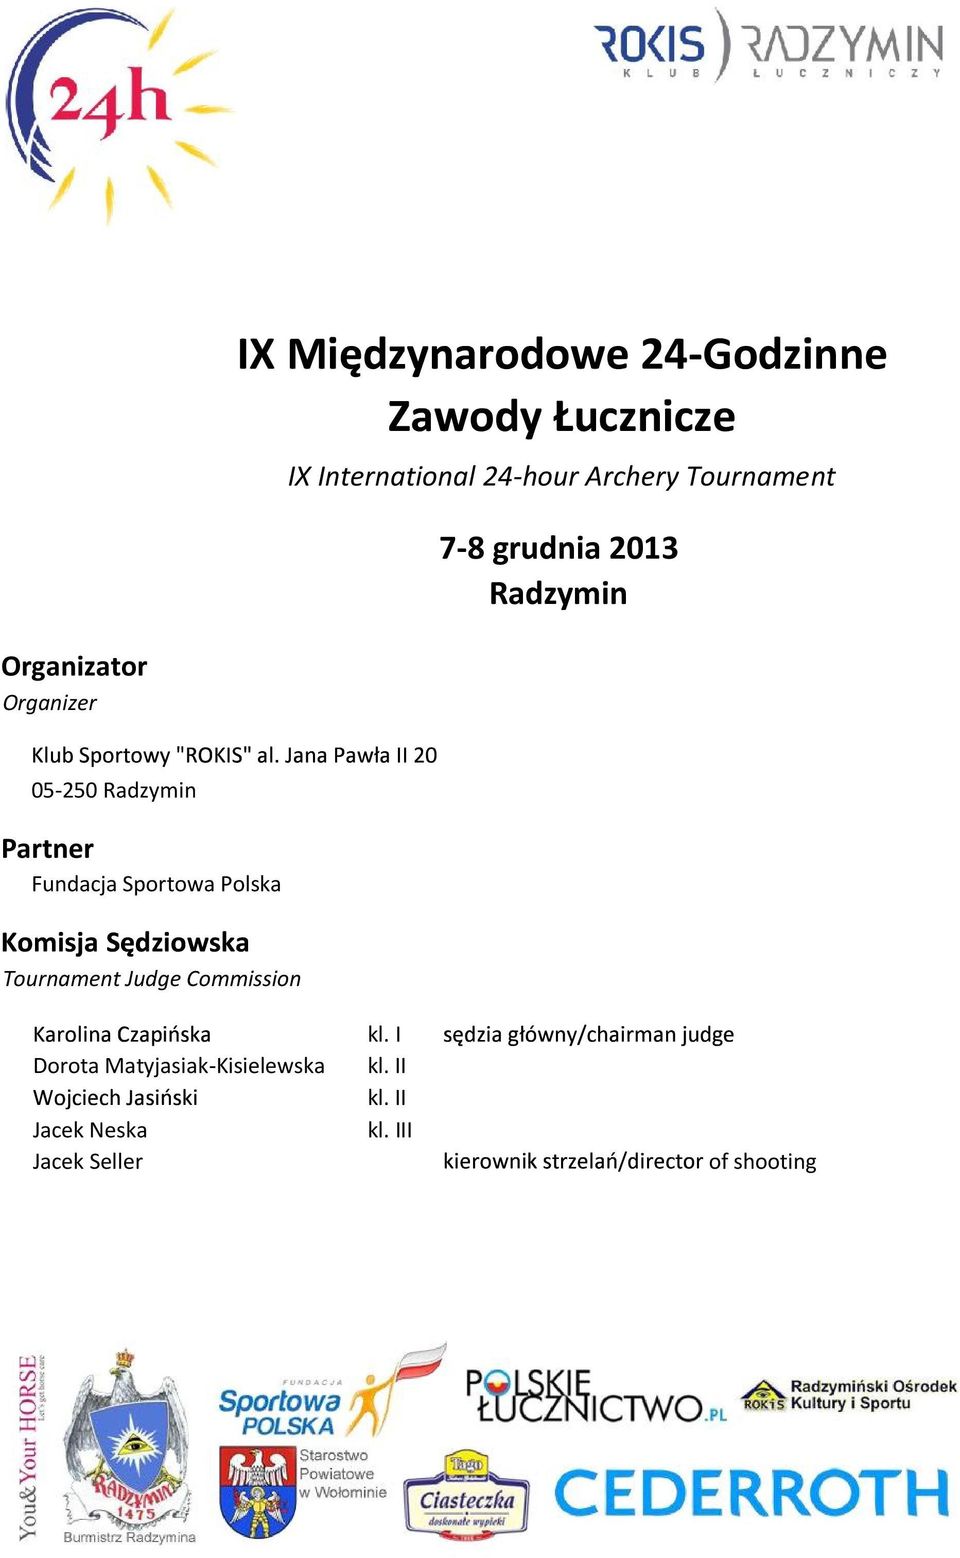 Fundacja Sportowa Polska Tournament Judge Commission Dorota